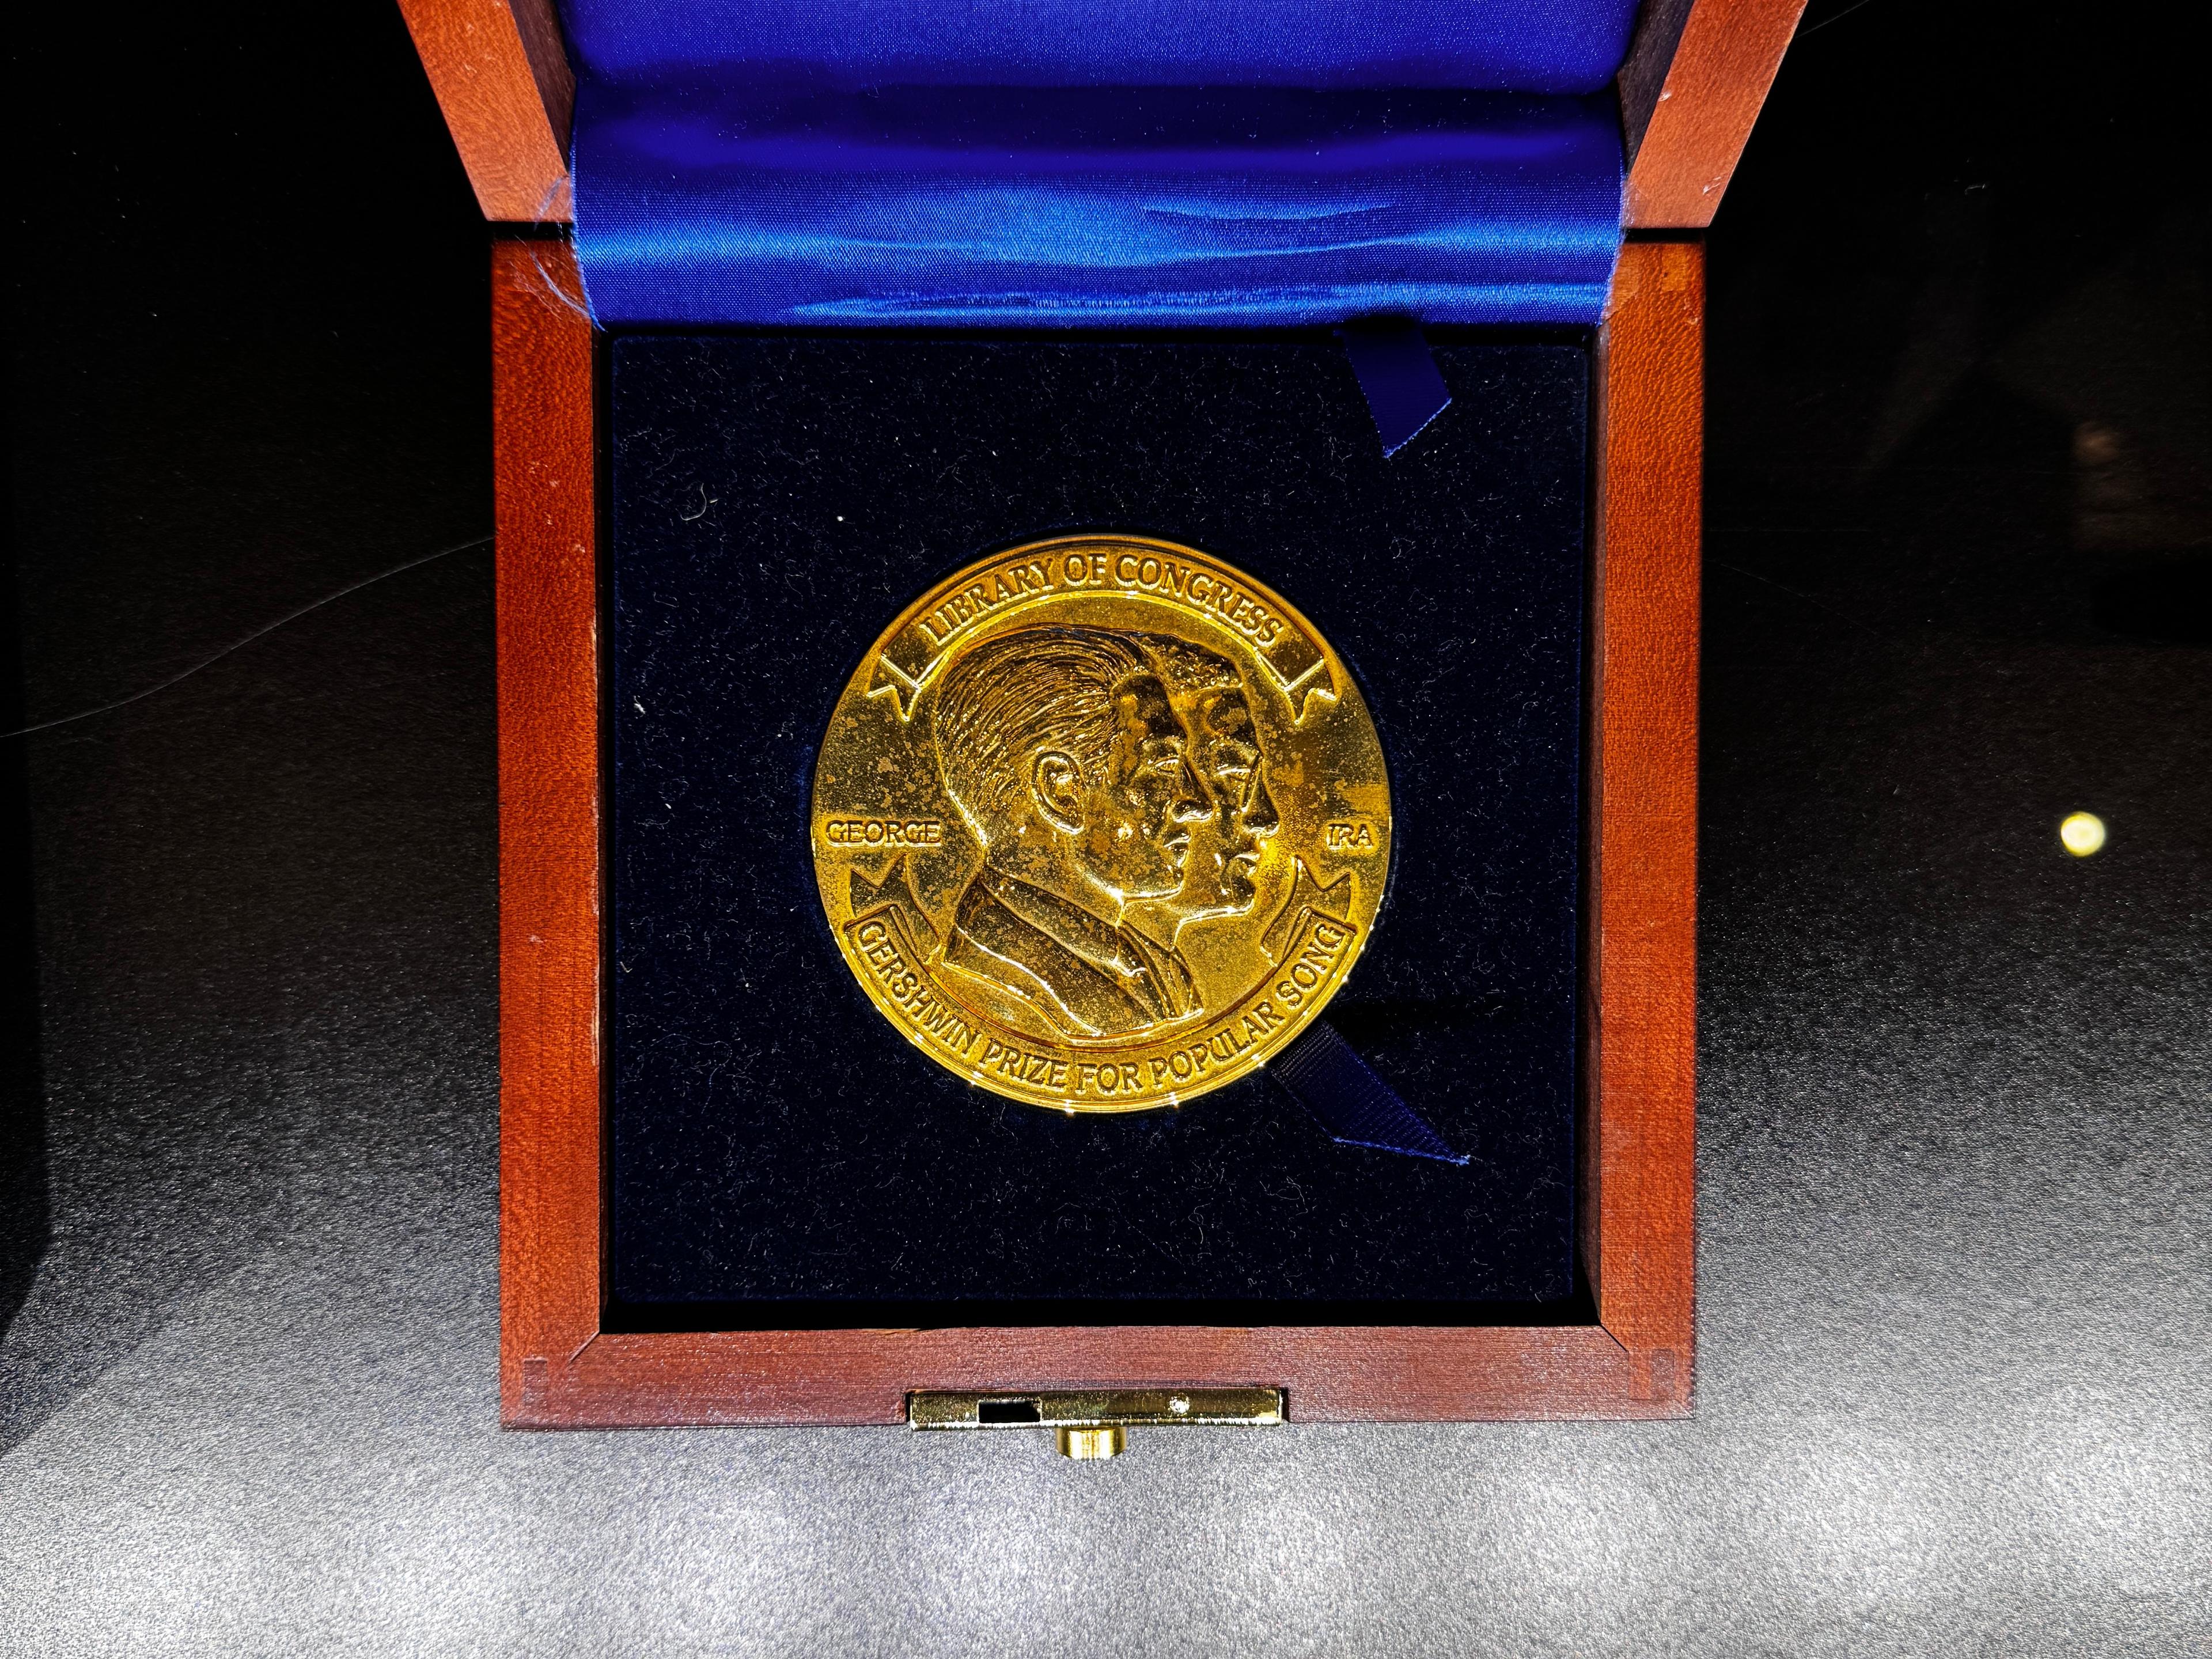 A medal in a presentation box